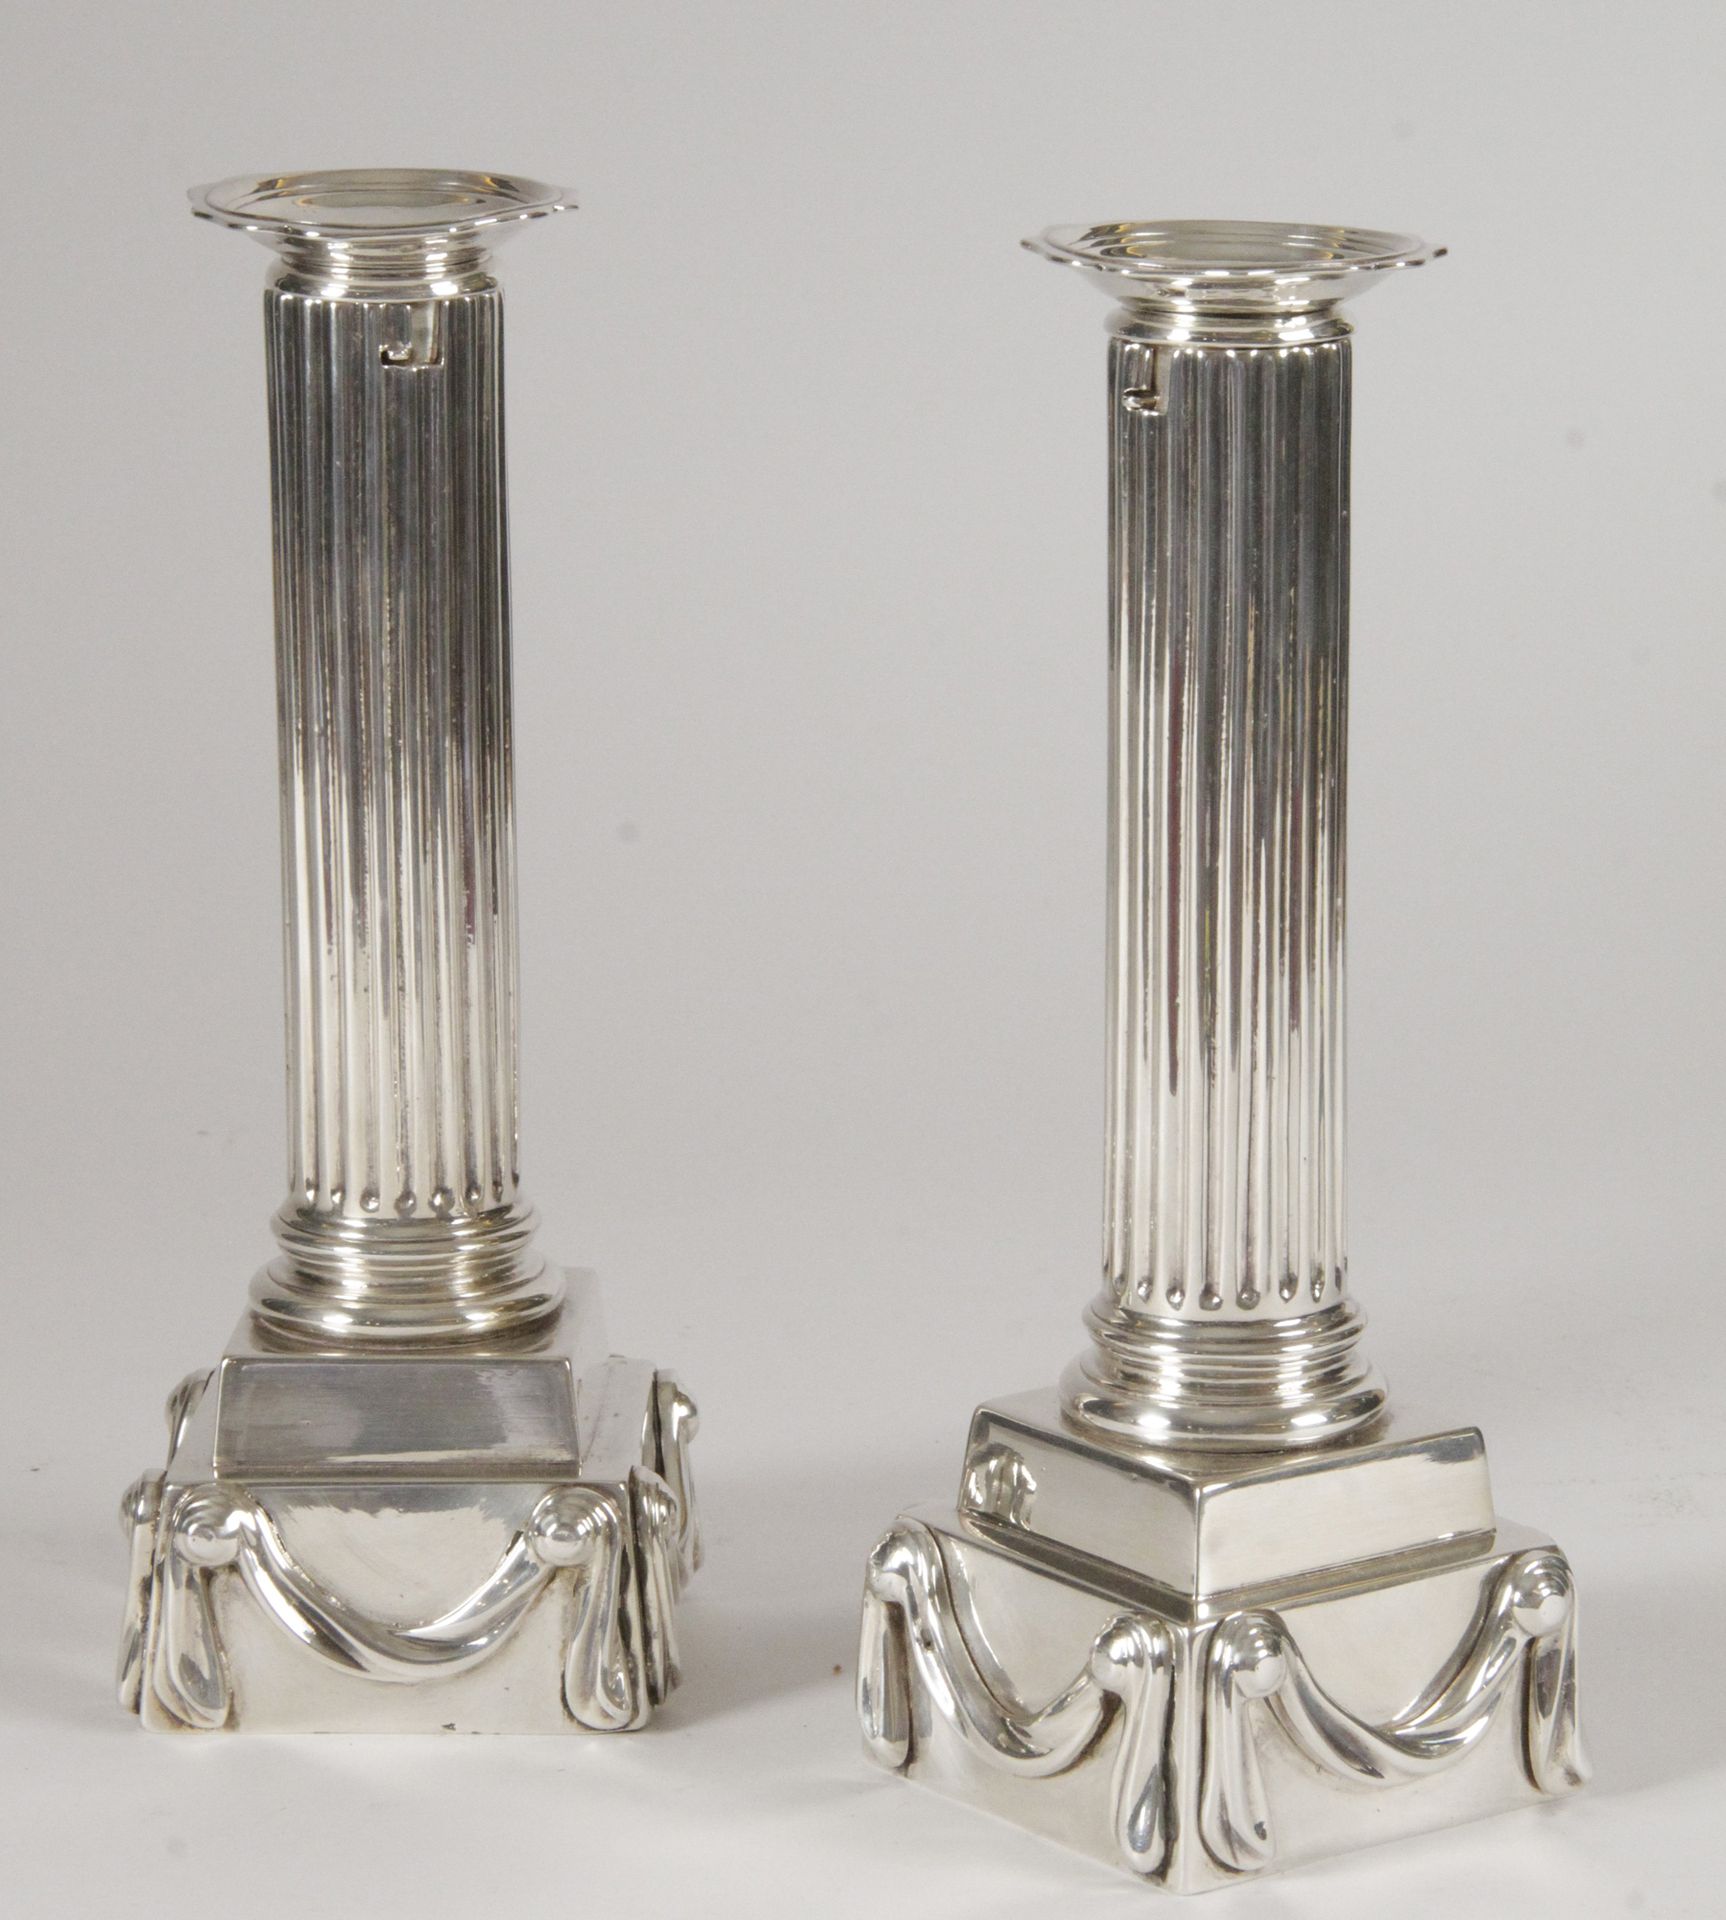 Null 一对镀银的青铜火炬手，在一个双阶梯和悬垂的底座上形成一个凹槽柱。 

国外工作(英国或奥地利???)

18世纪末至19世纪初

H.23厘米